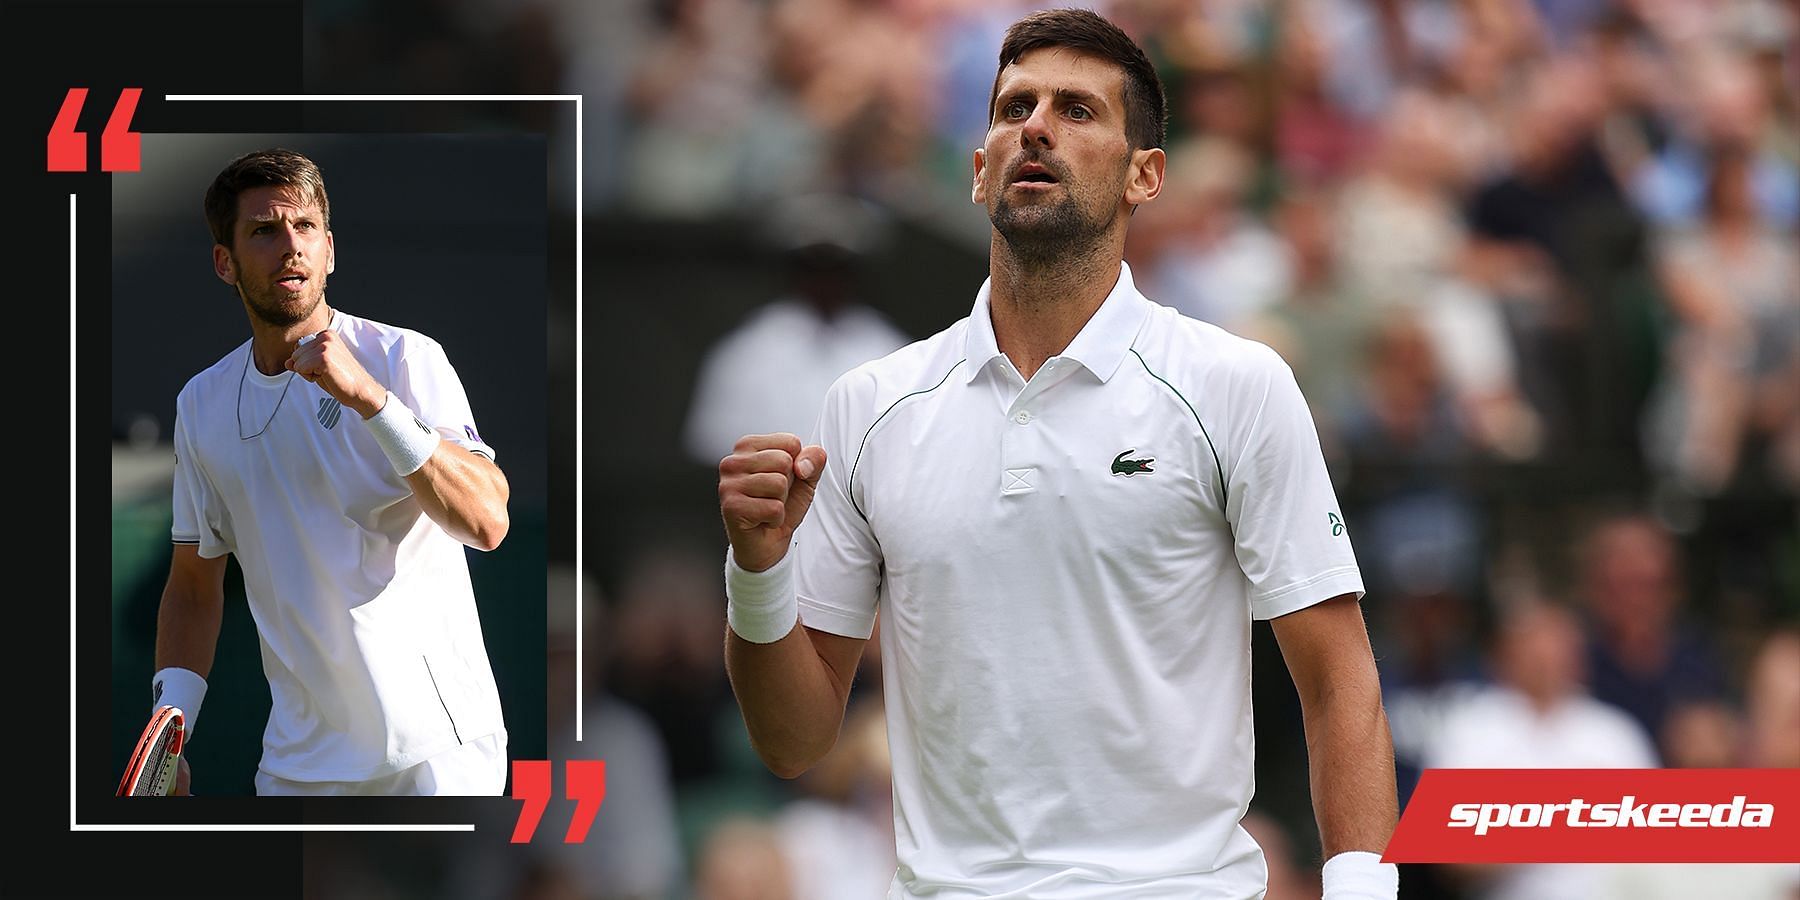 Cameron Norrie will face Novak Djokovic in the Wimbledon semifinals